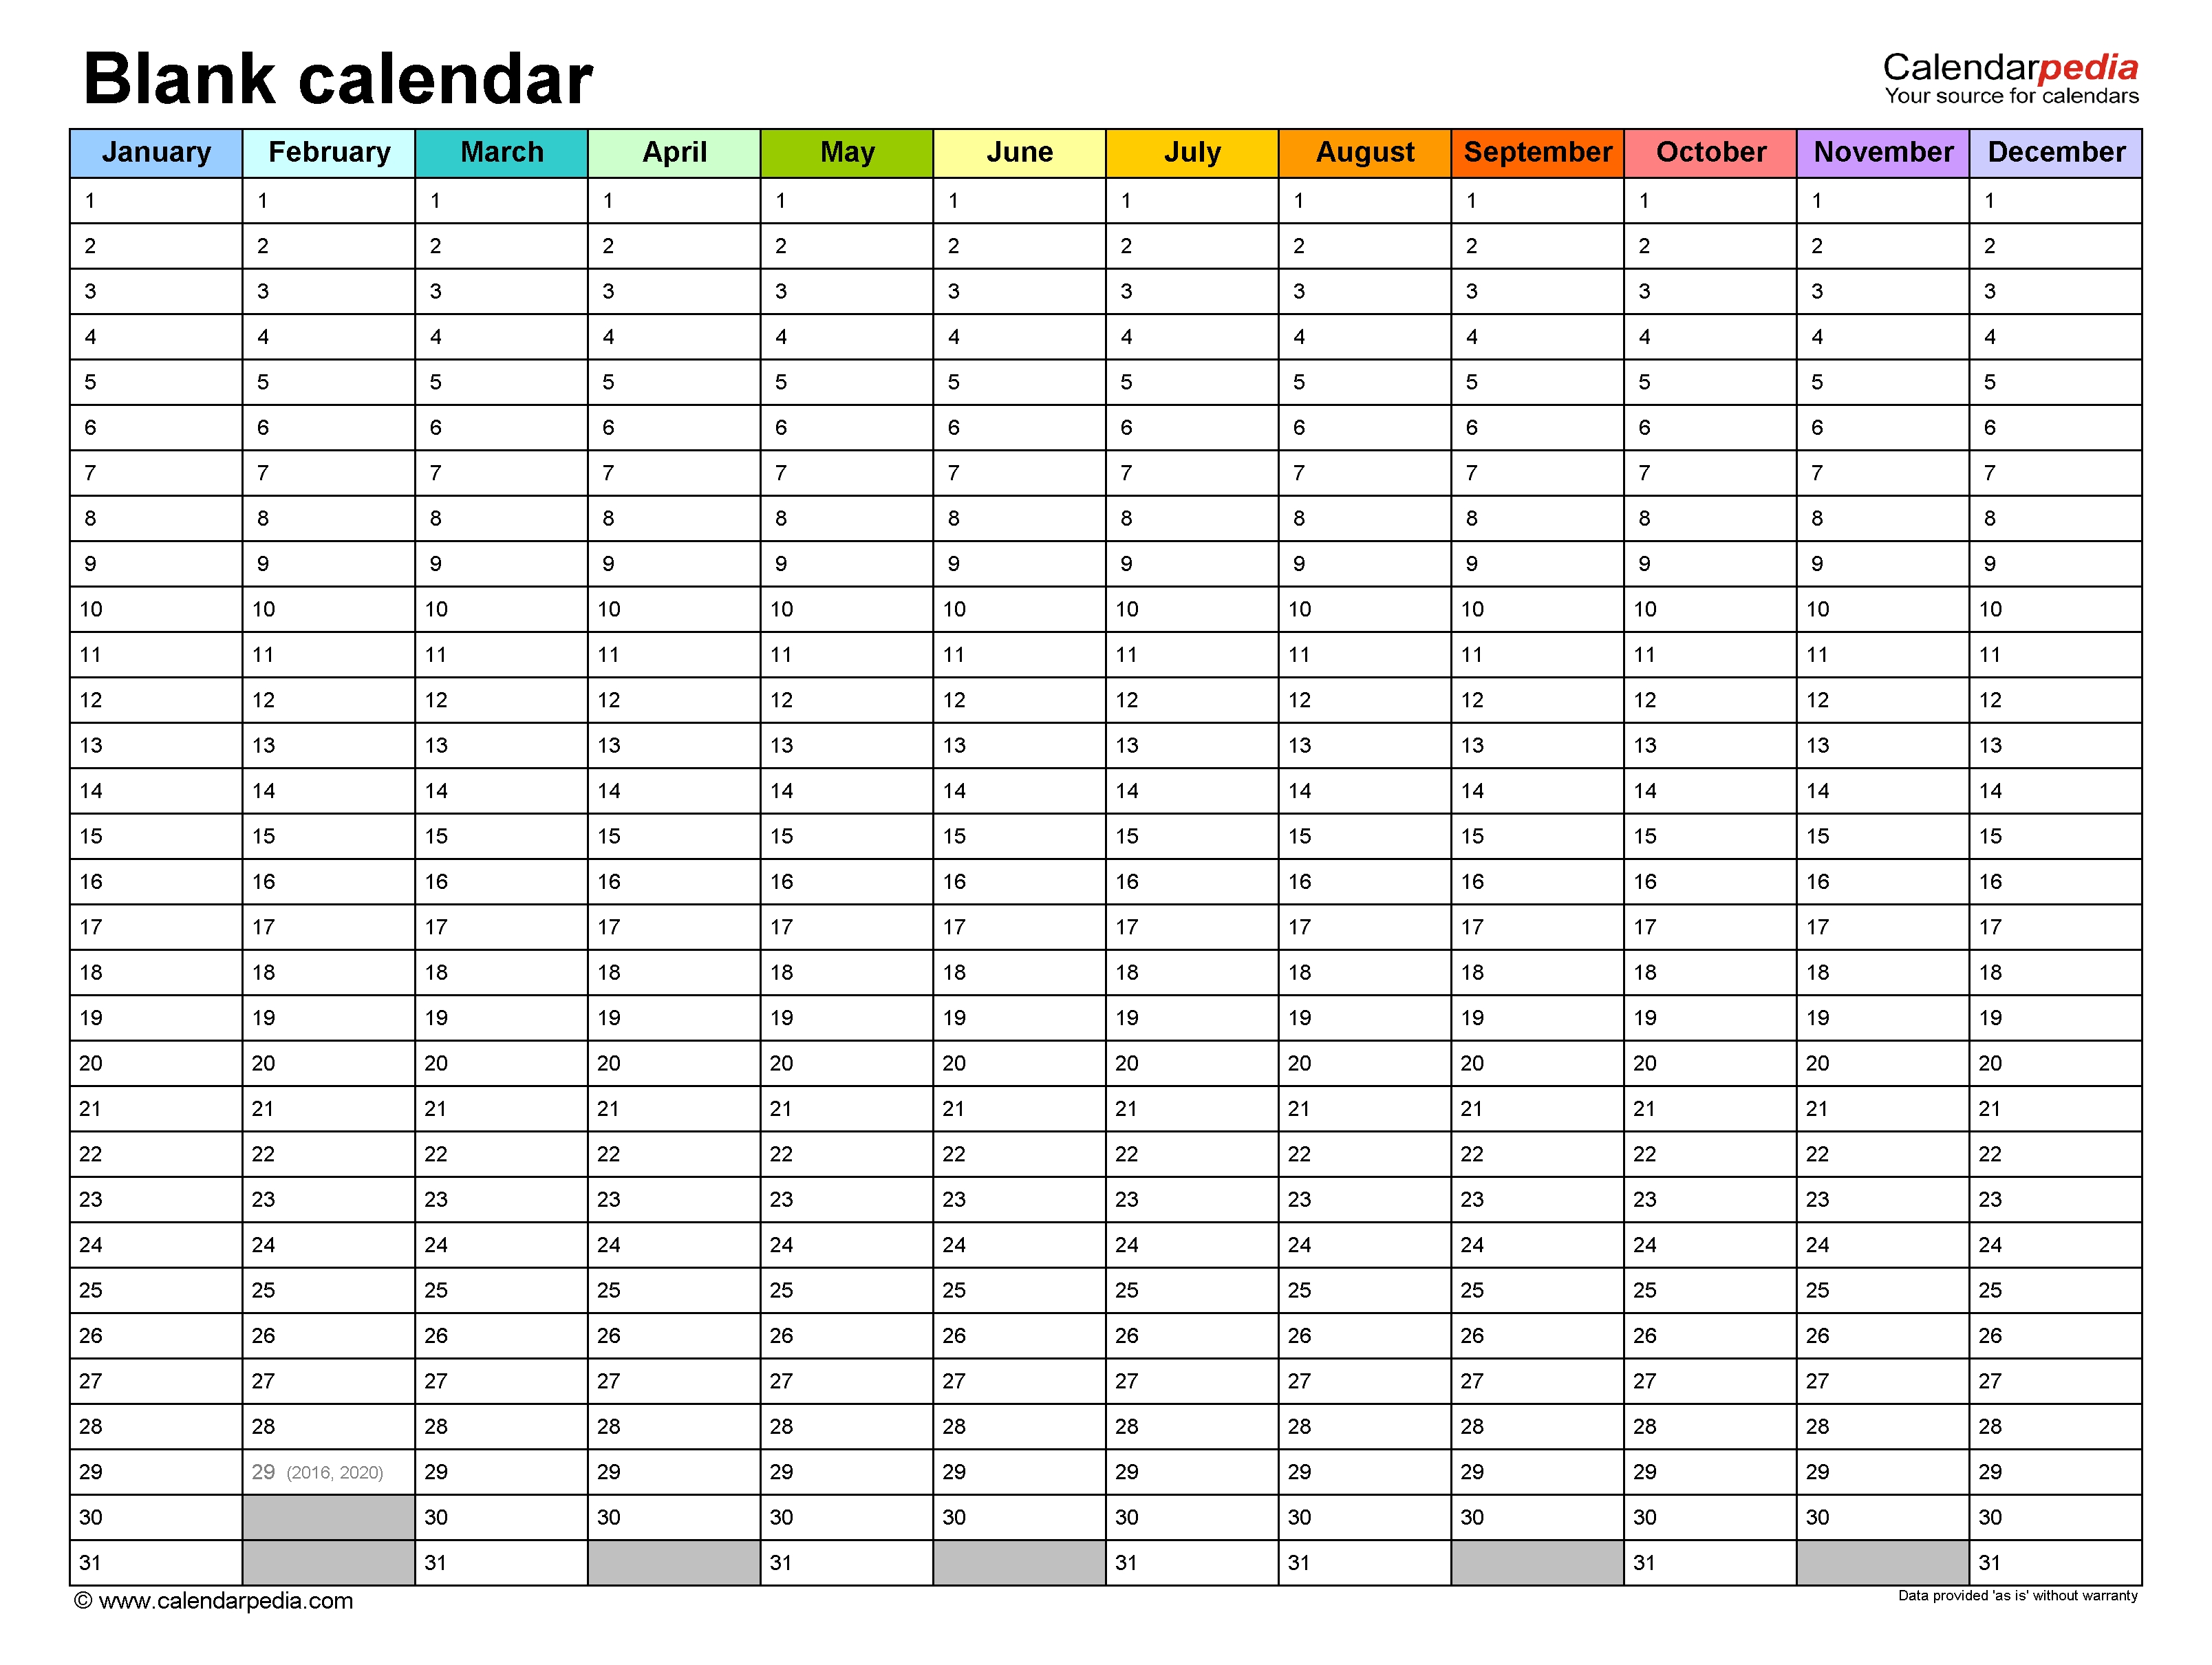 Blank Calendars - Free Printable Microsoft Word Templates Calendar Template Year 1